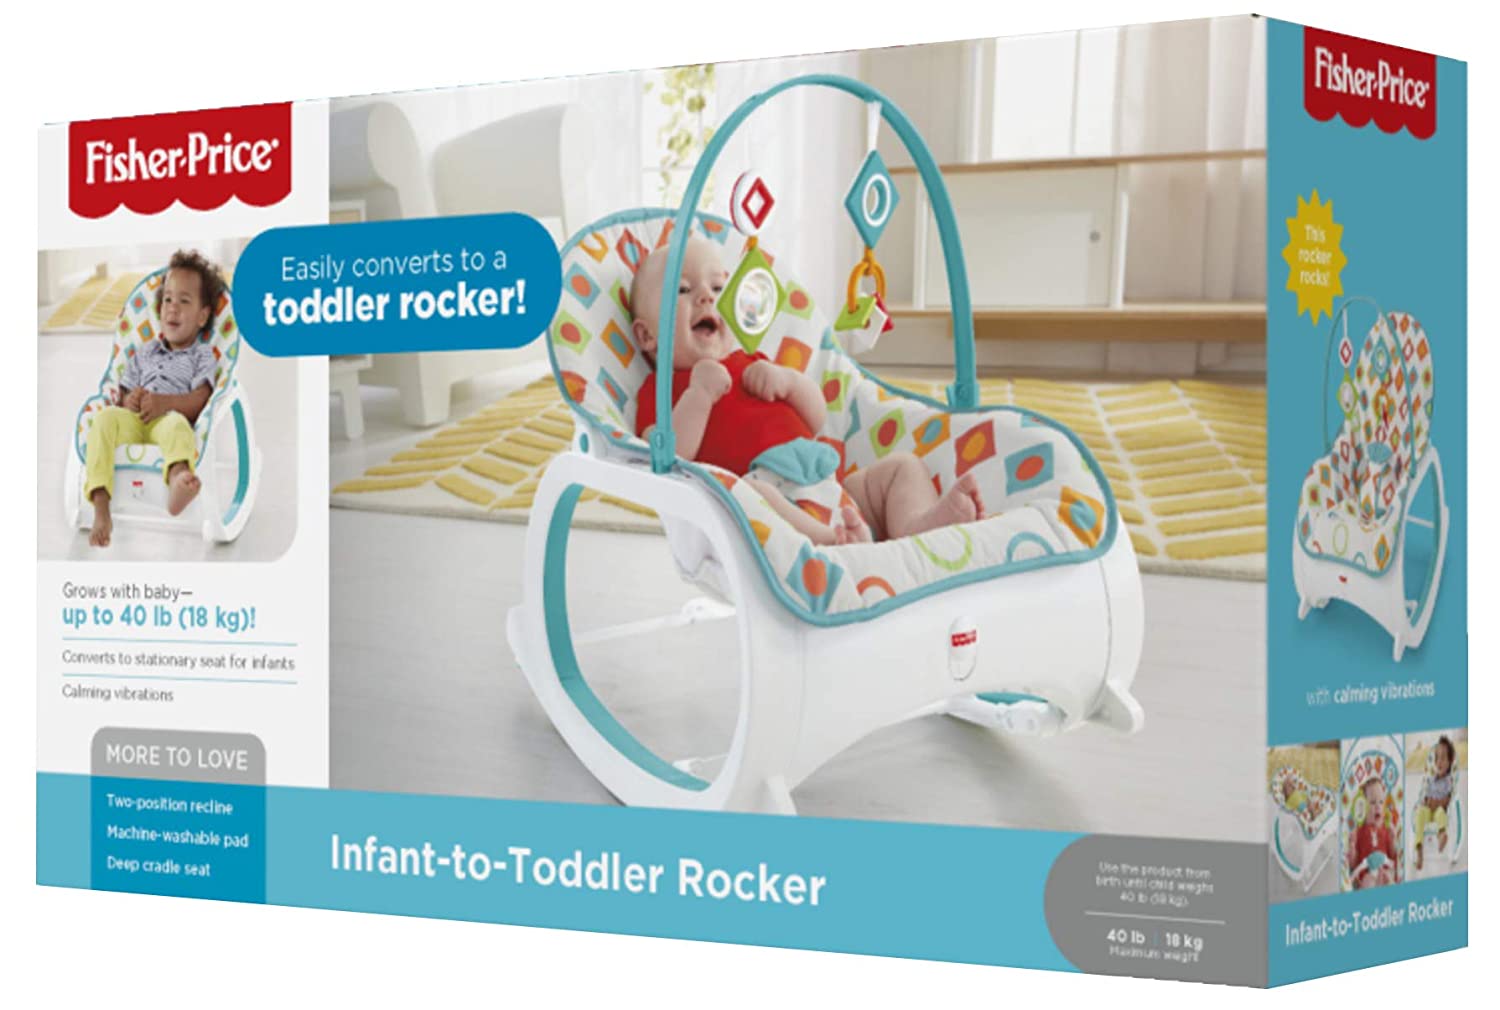 Fisher-Price Infant-to-Toddler Rocker